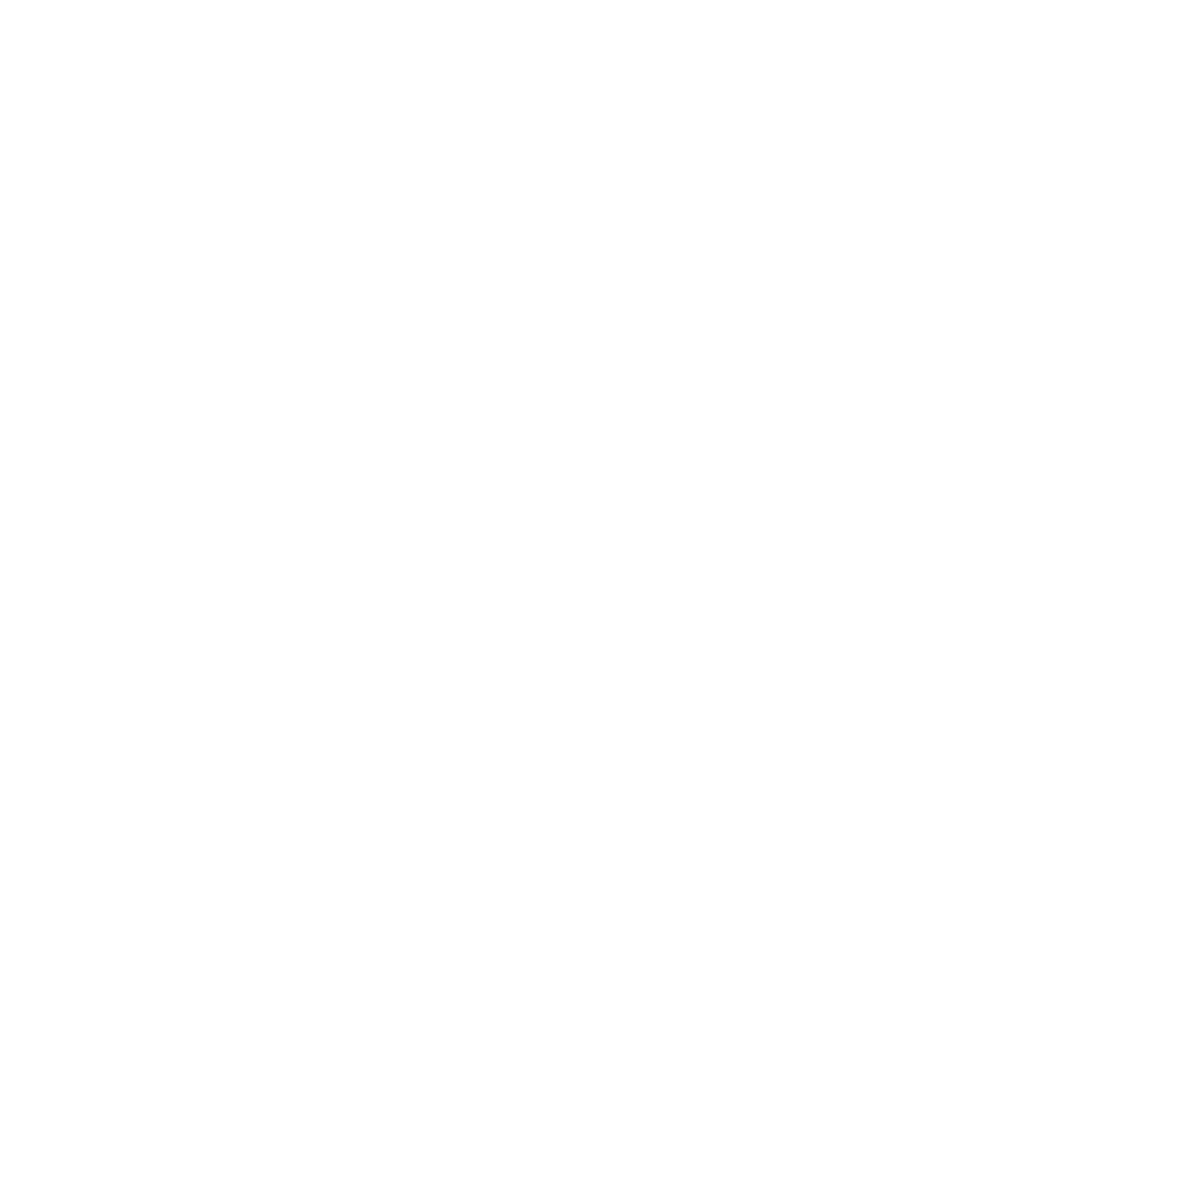 circle4